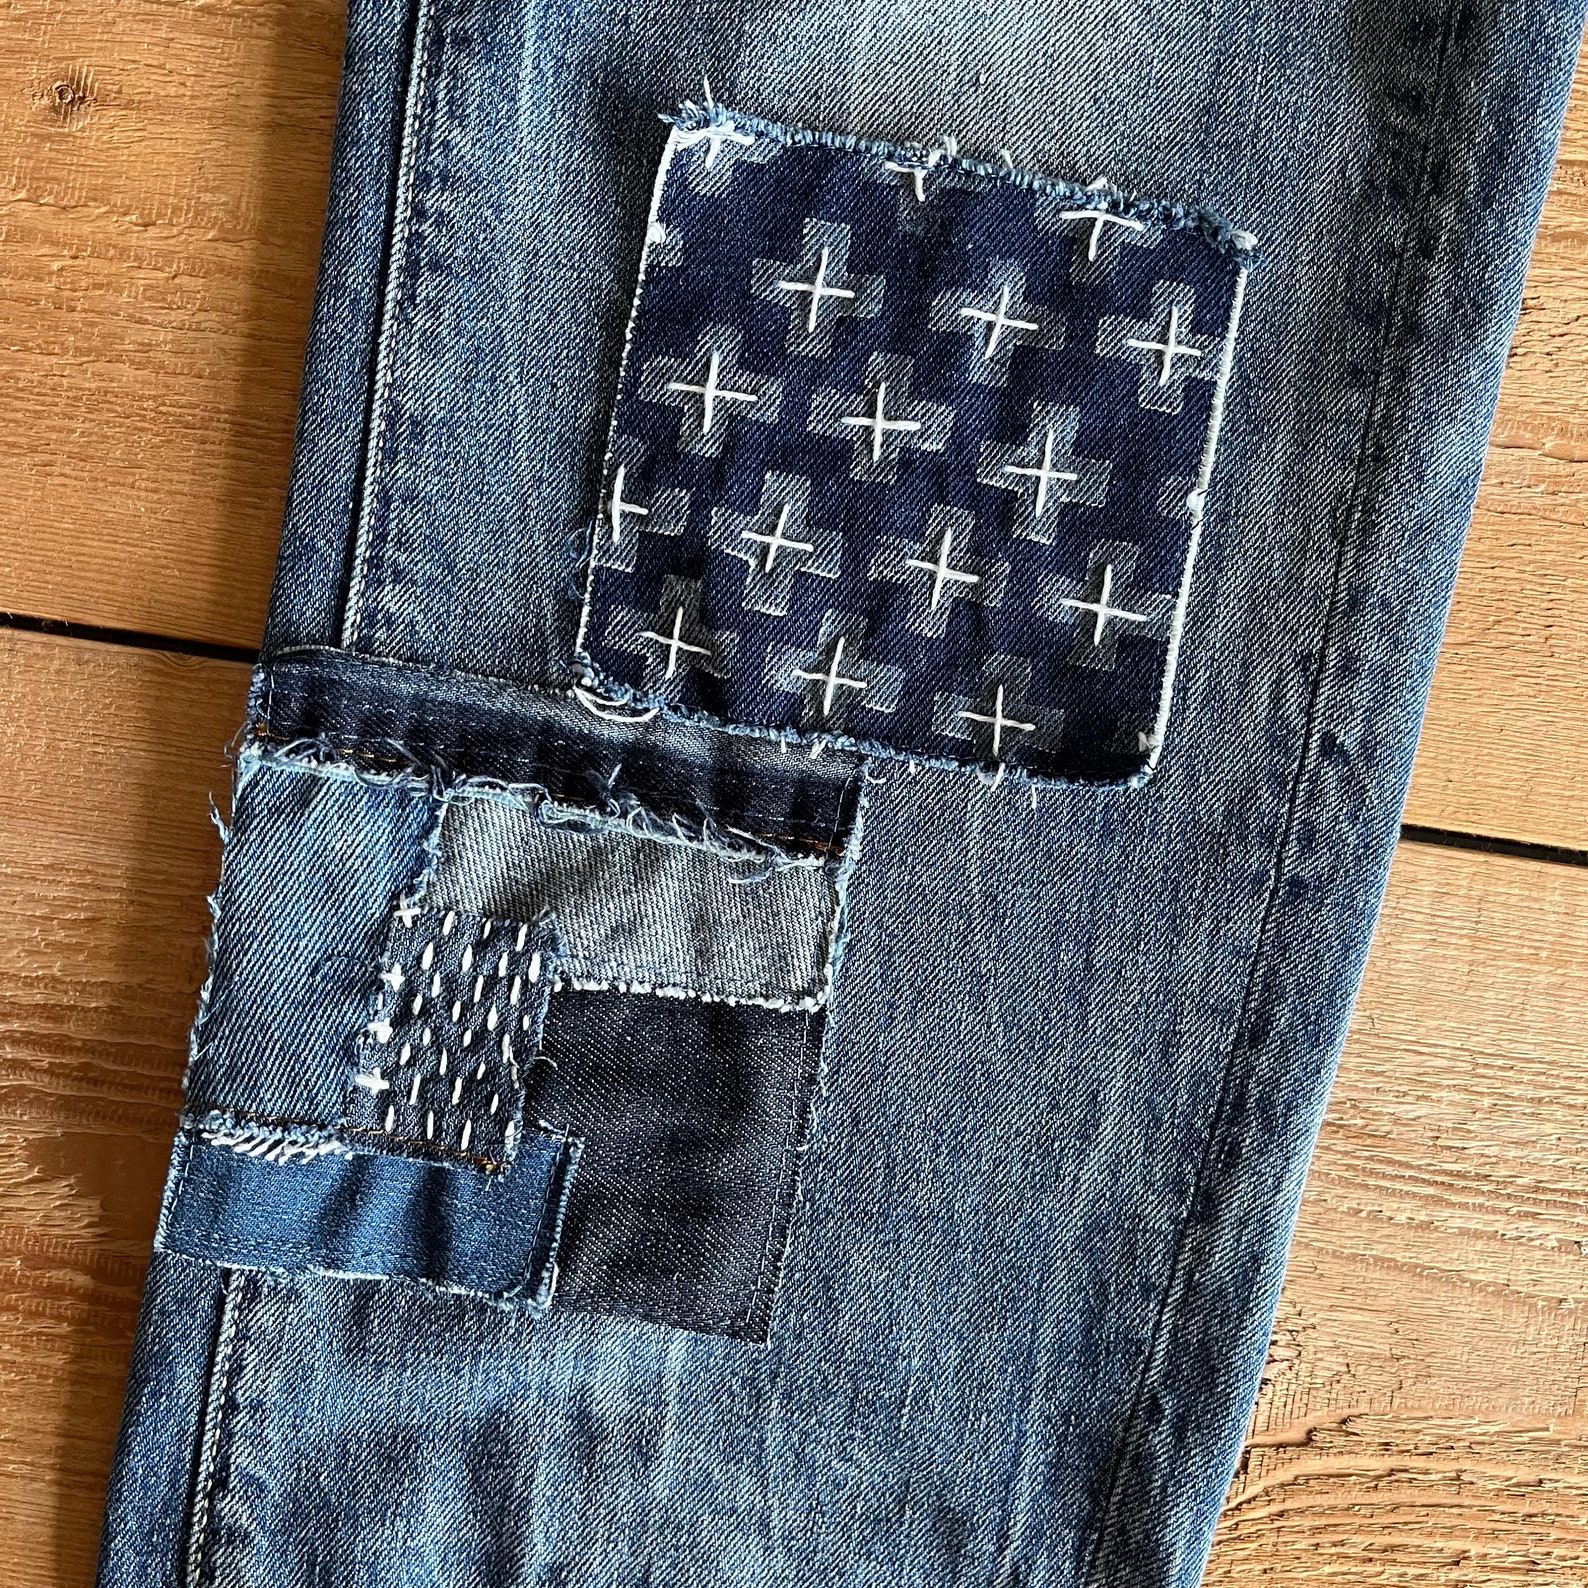 Blue Jeans Patch Recycled Denim Applique Visible Mending - Etsy